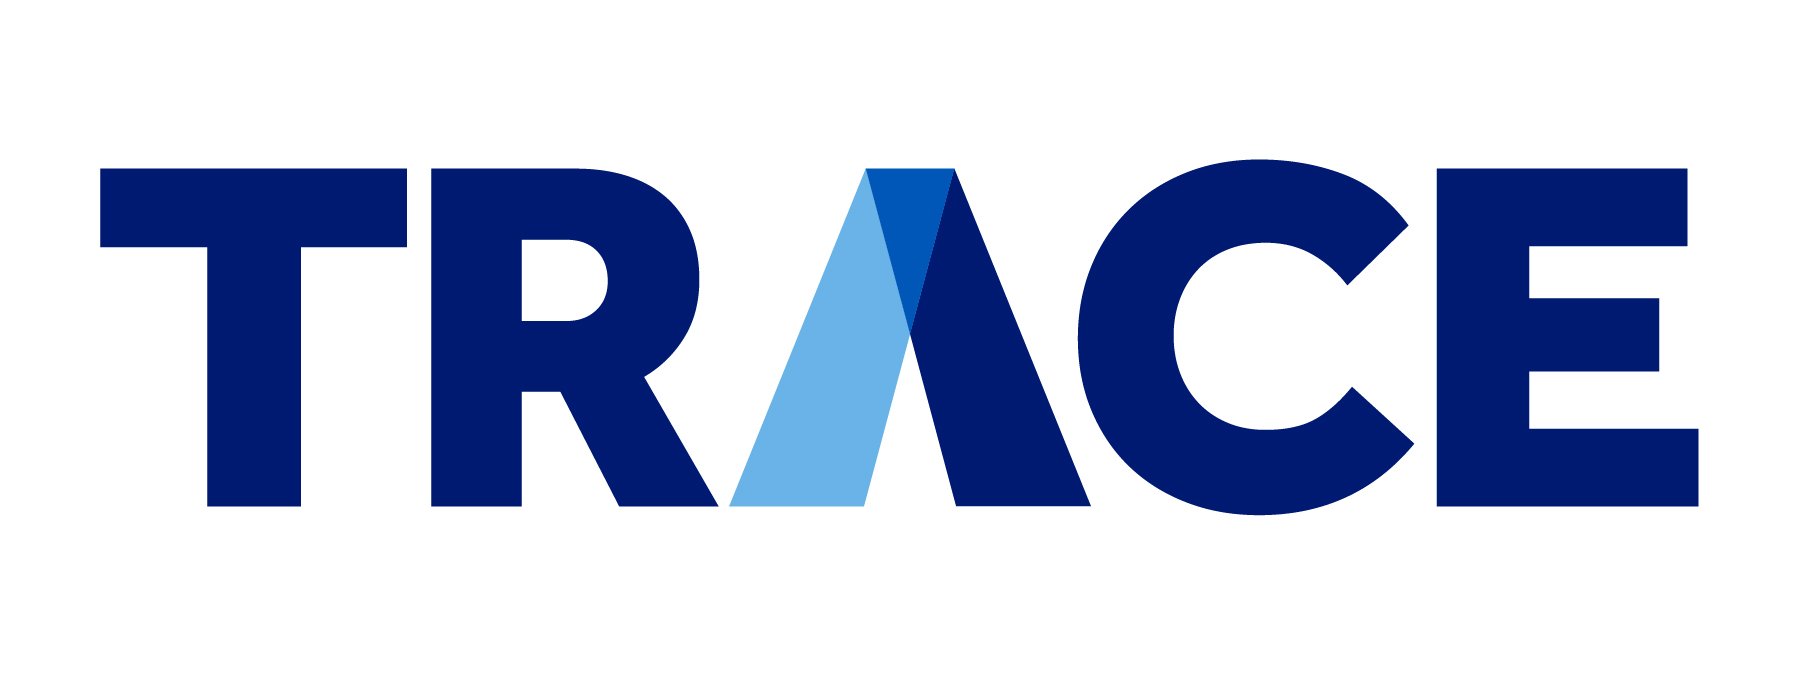 Trace Associates Logo.jpg